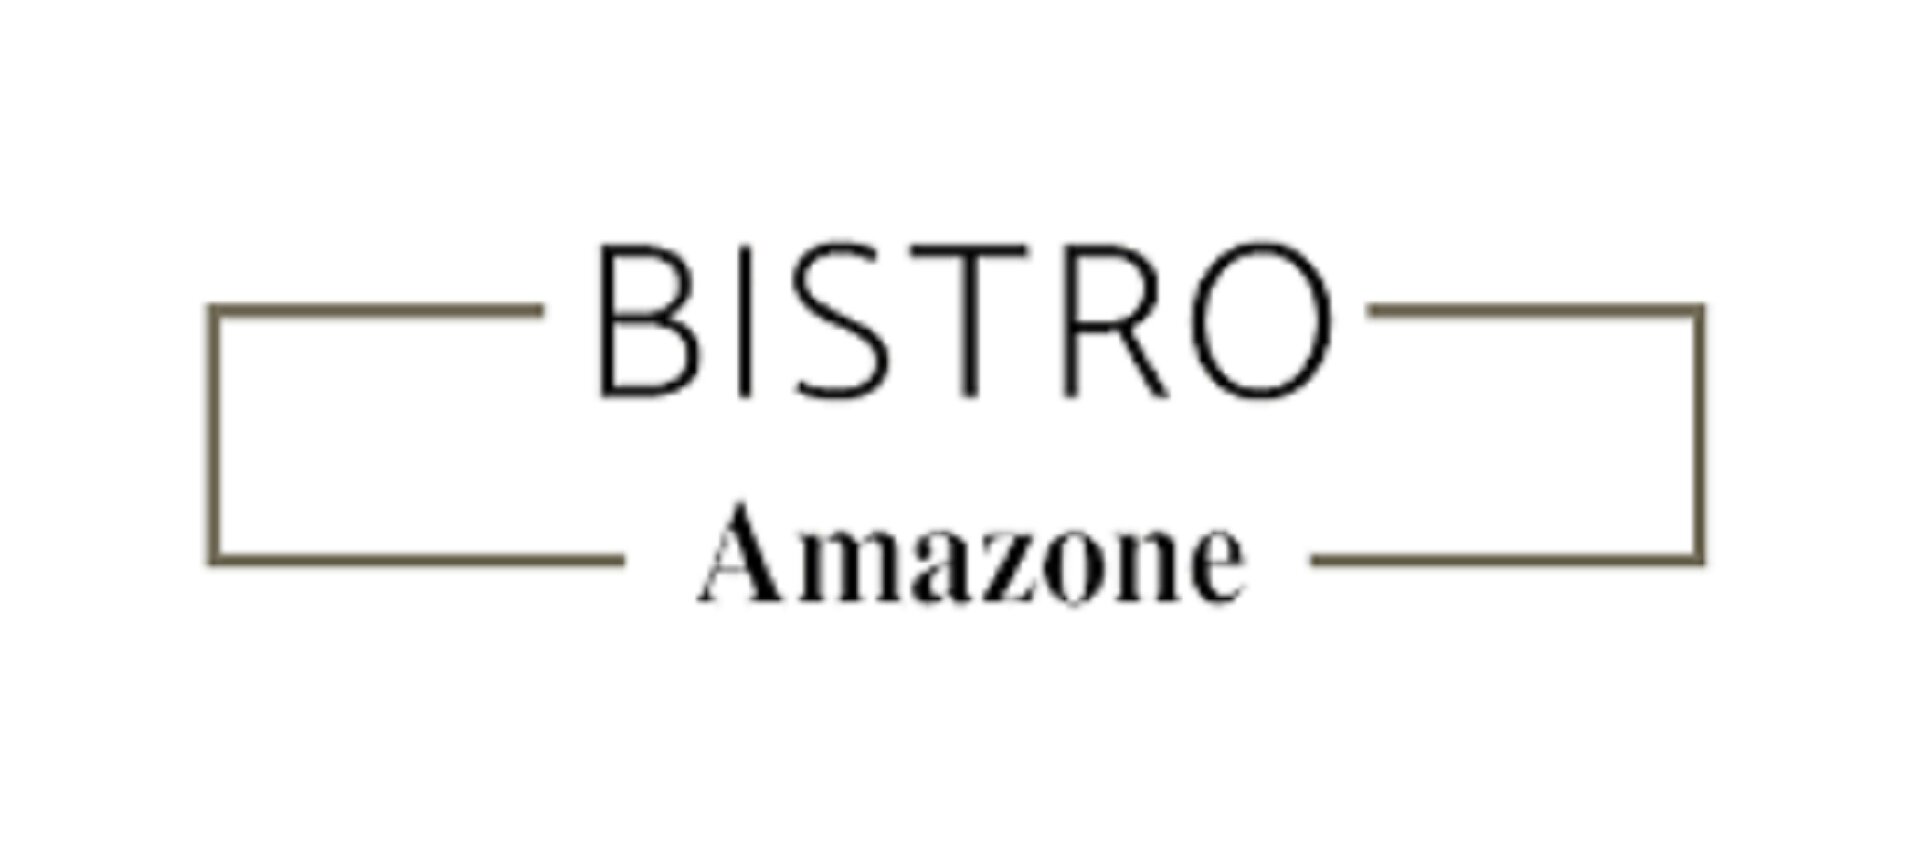 Bistro - frituur Amazone - logo